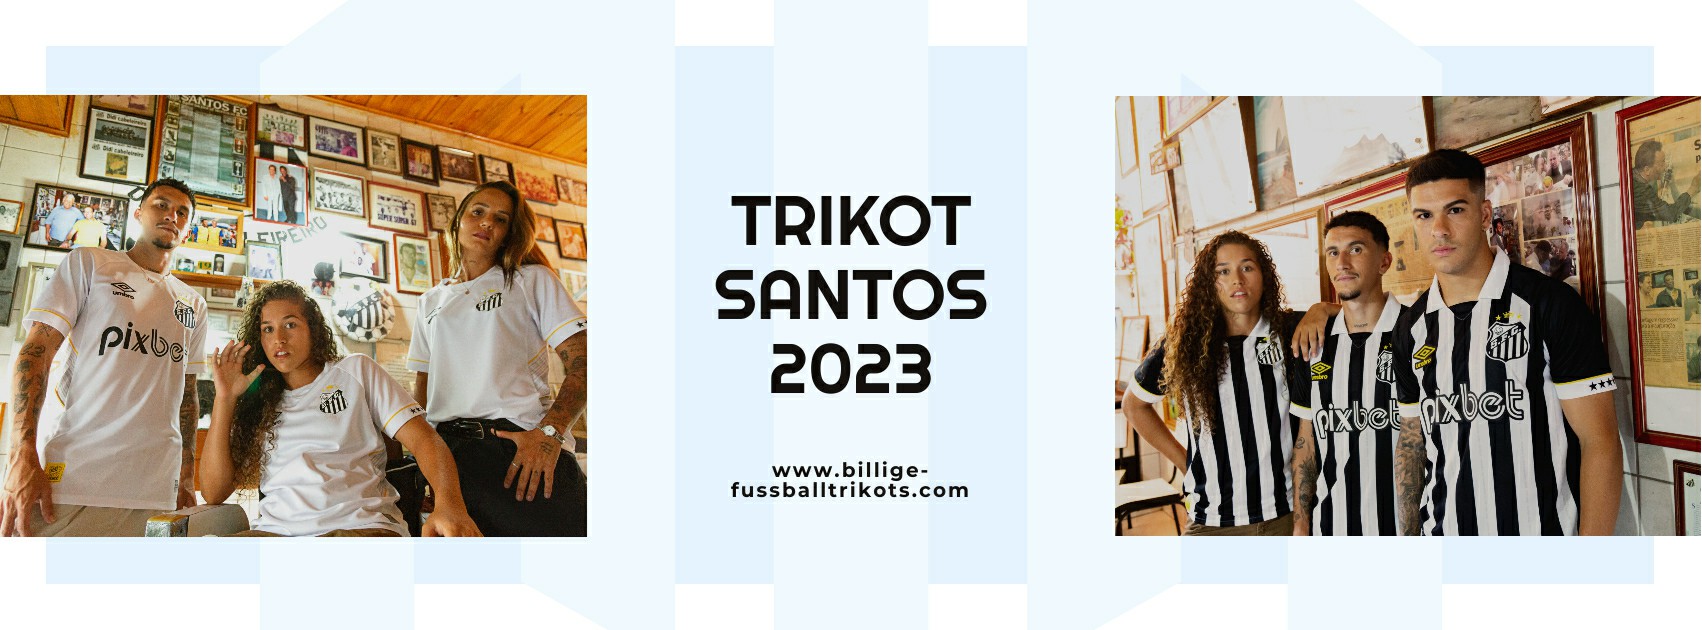 Santos Trikot 2023-2024